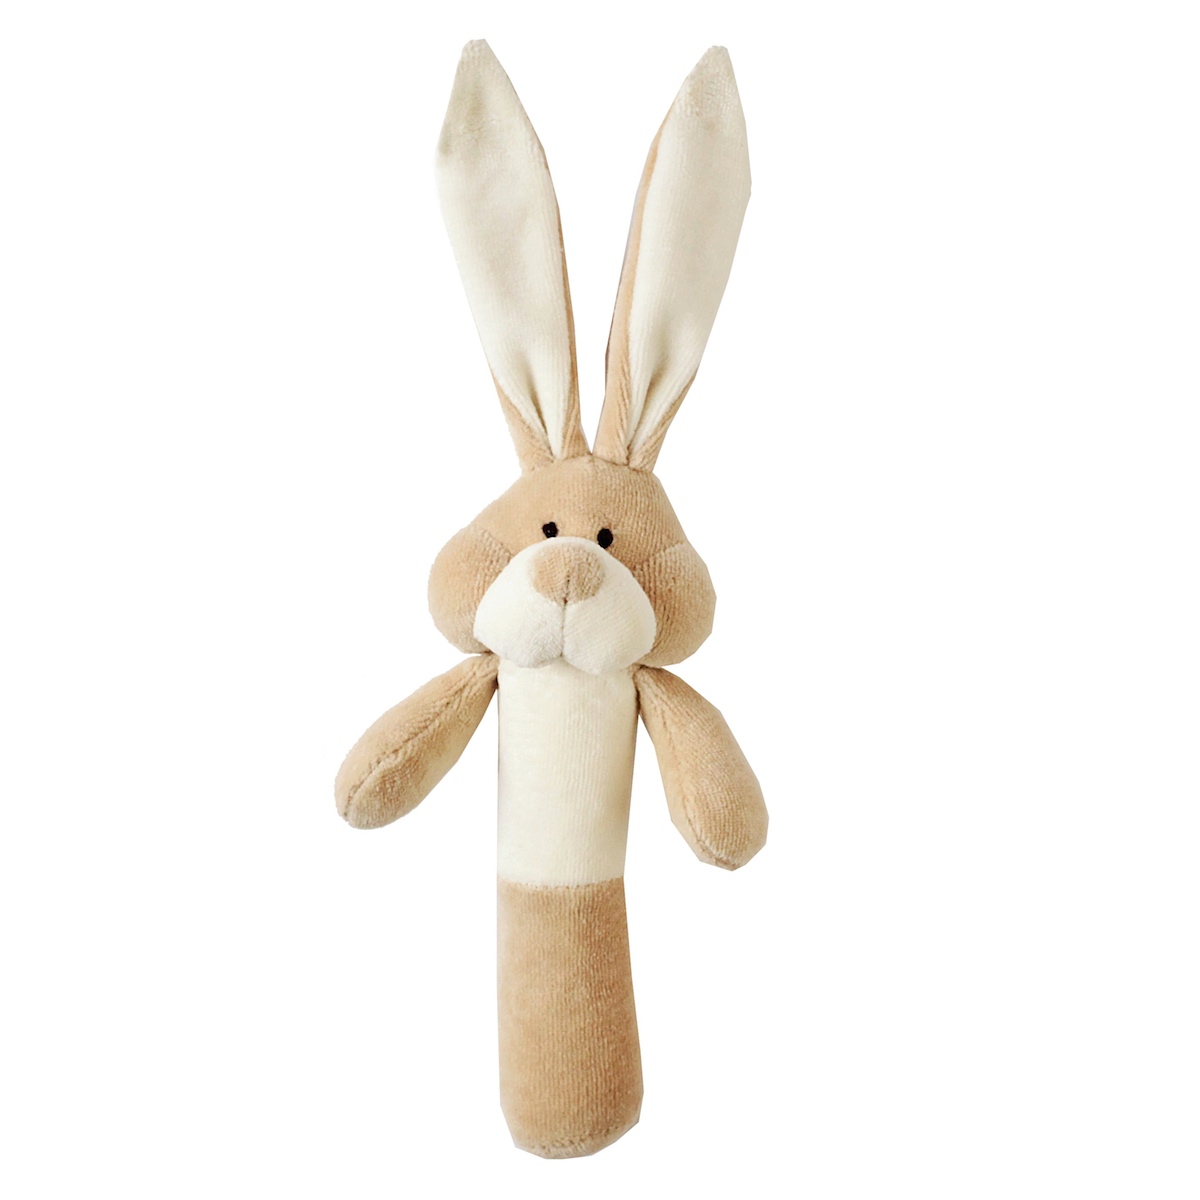 Ruskovilla's Soft Toy Rattle Bunny